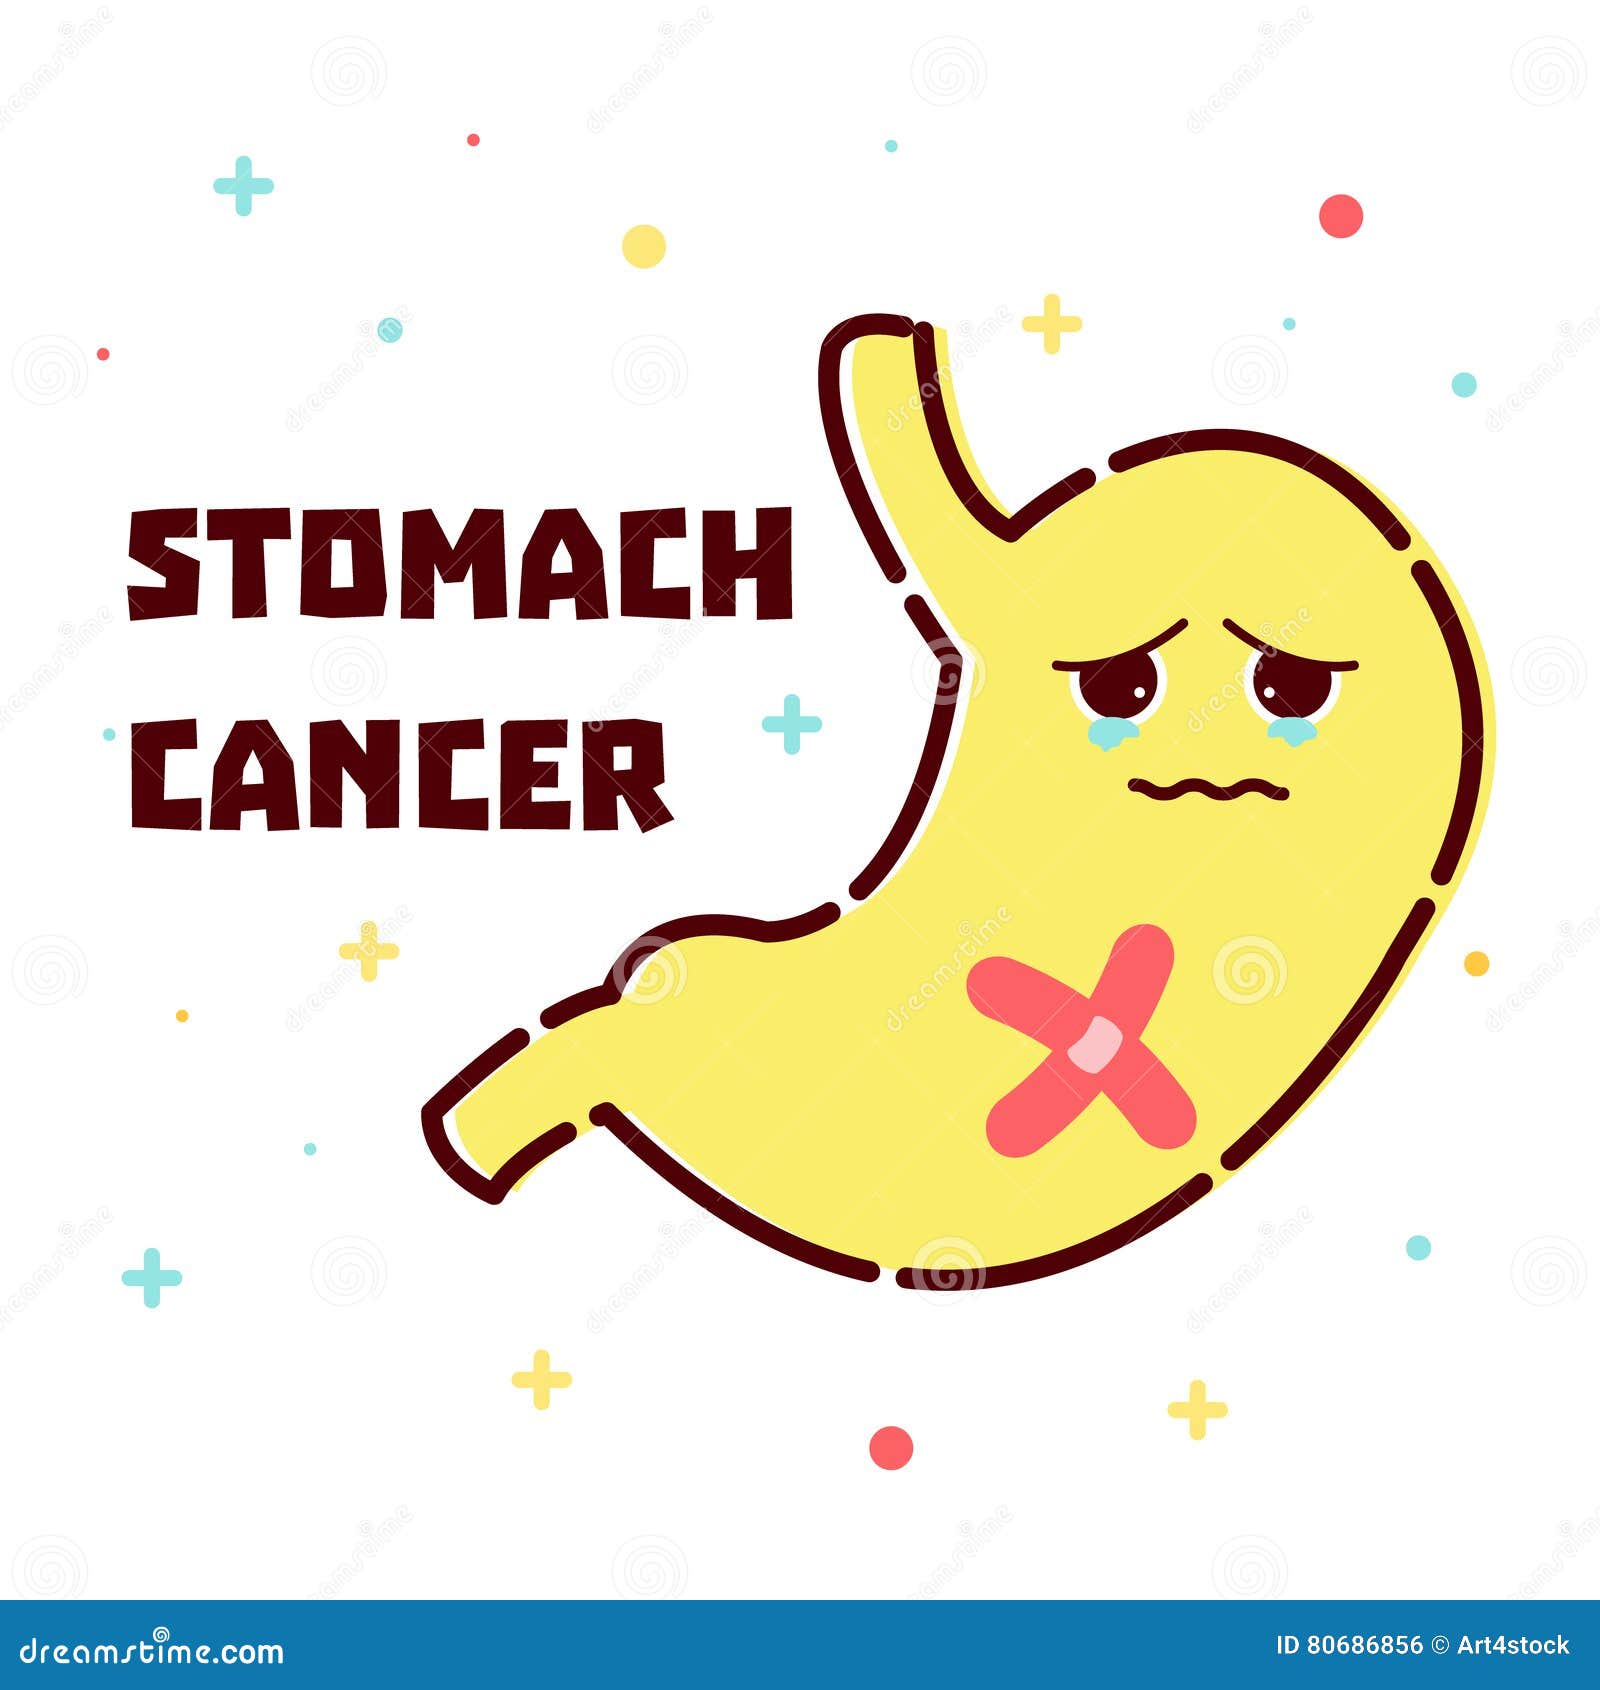 Stomach cancer  poster stock illustration Illustration of 